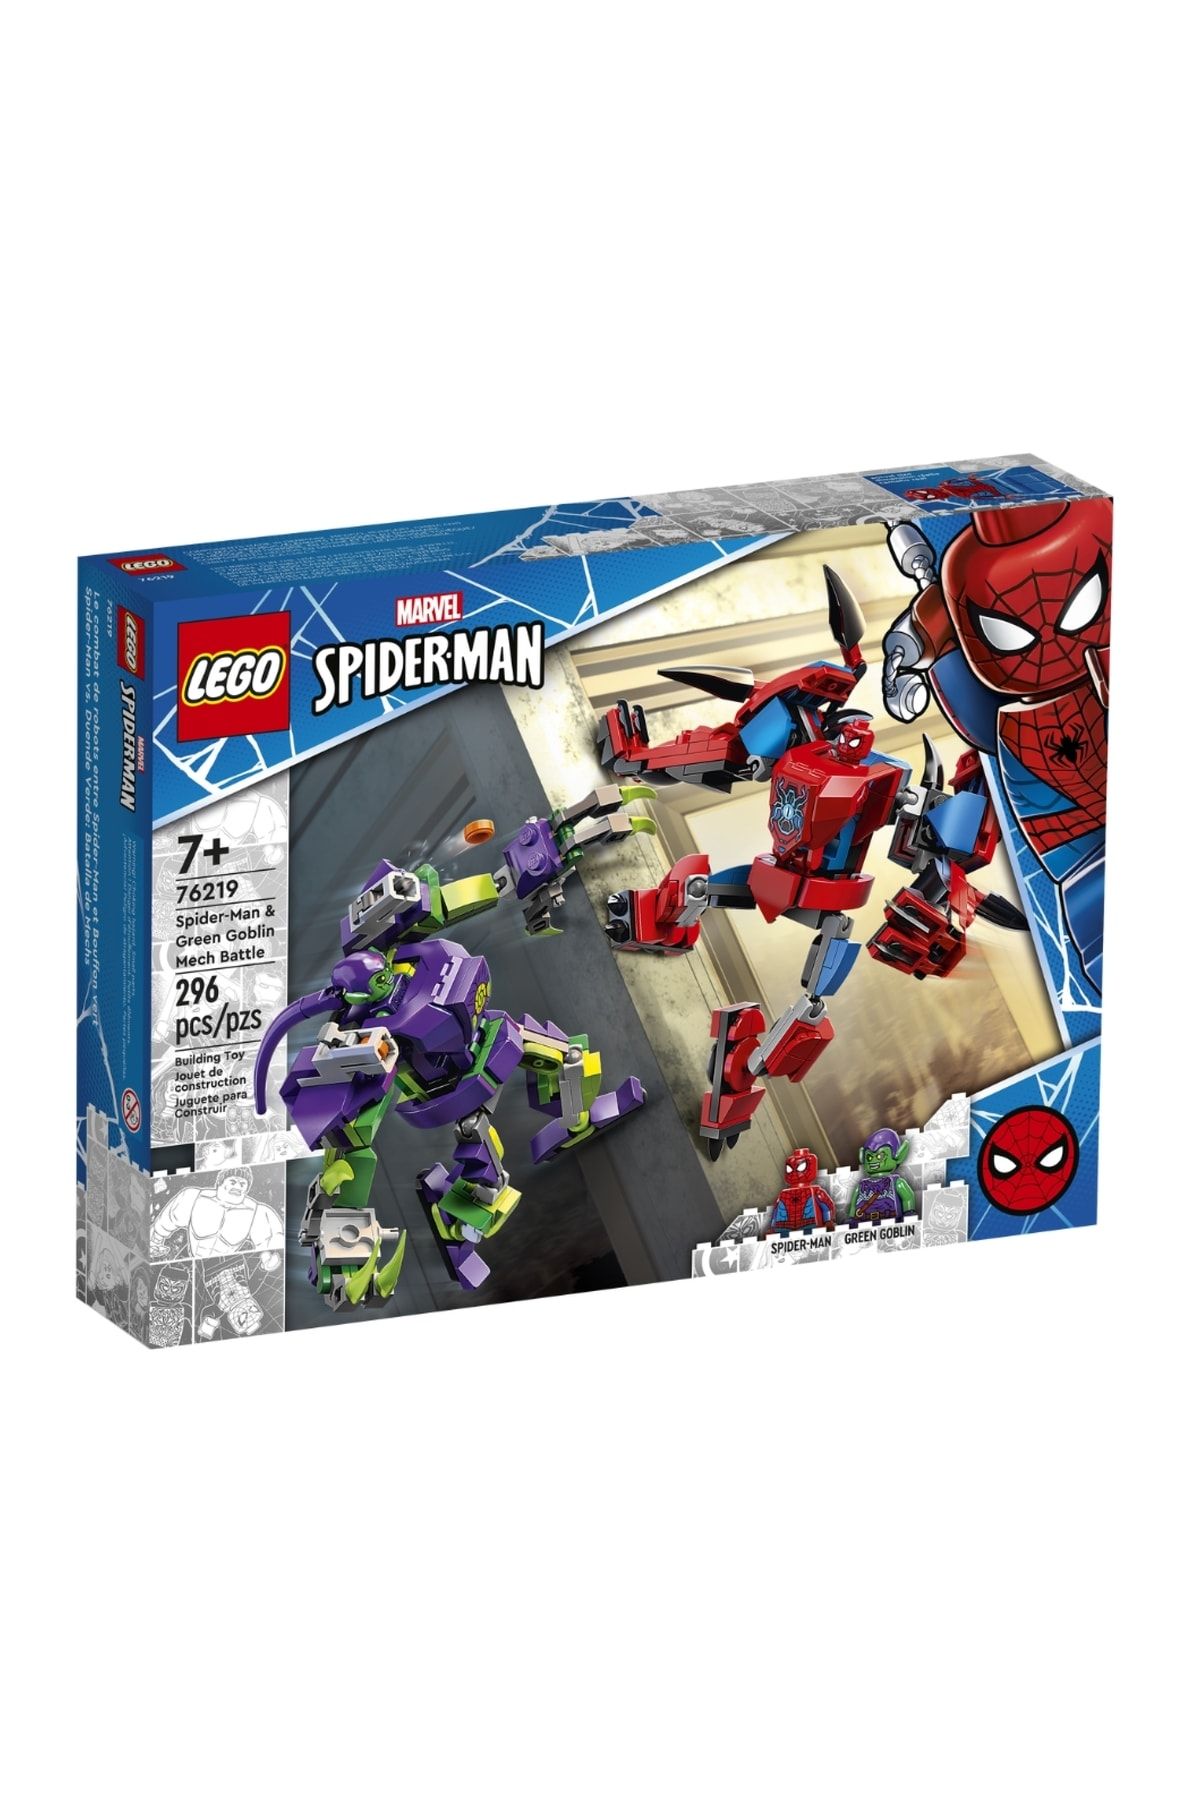 LEGO Spiderman Marvel Spider Man & Green Goblin Mech Battle Örümcek Adam Spider-man 76219 296